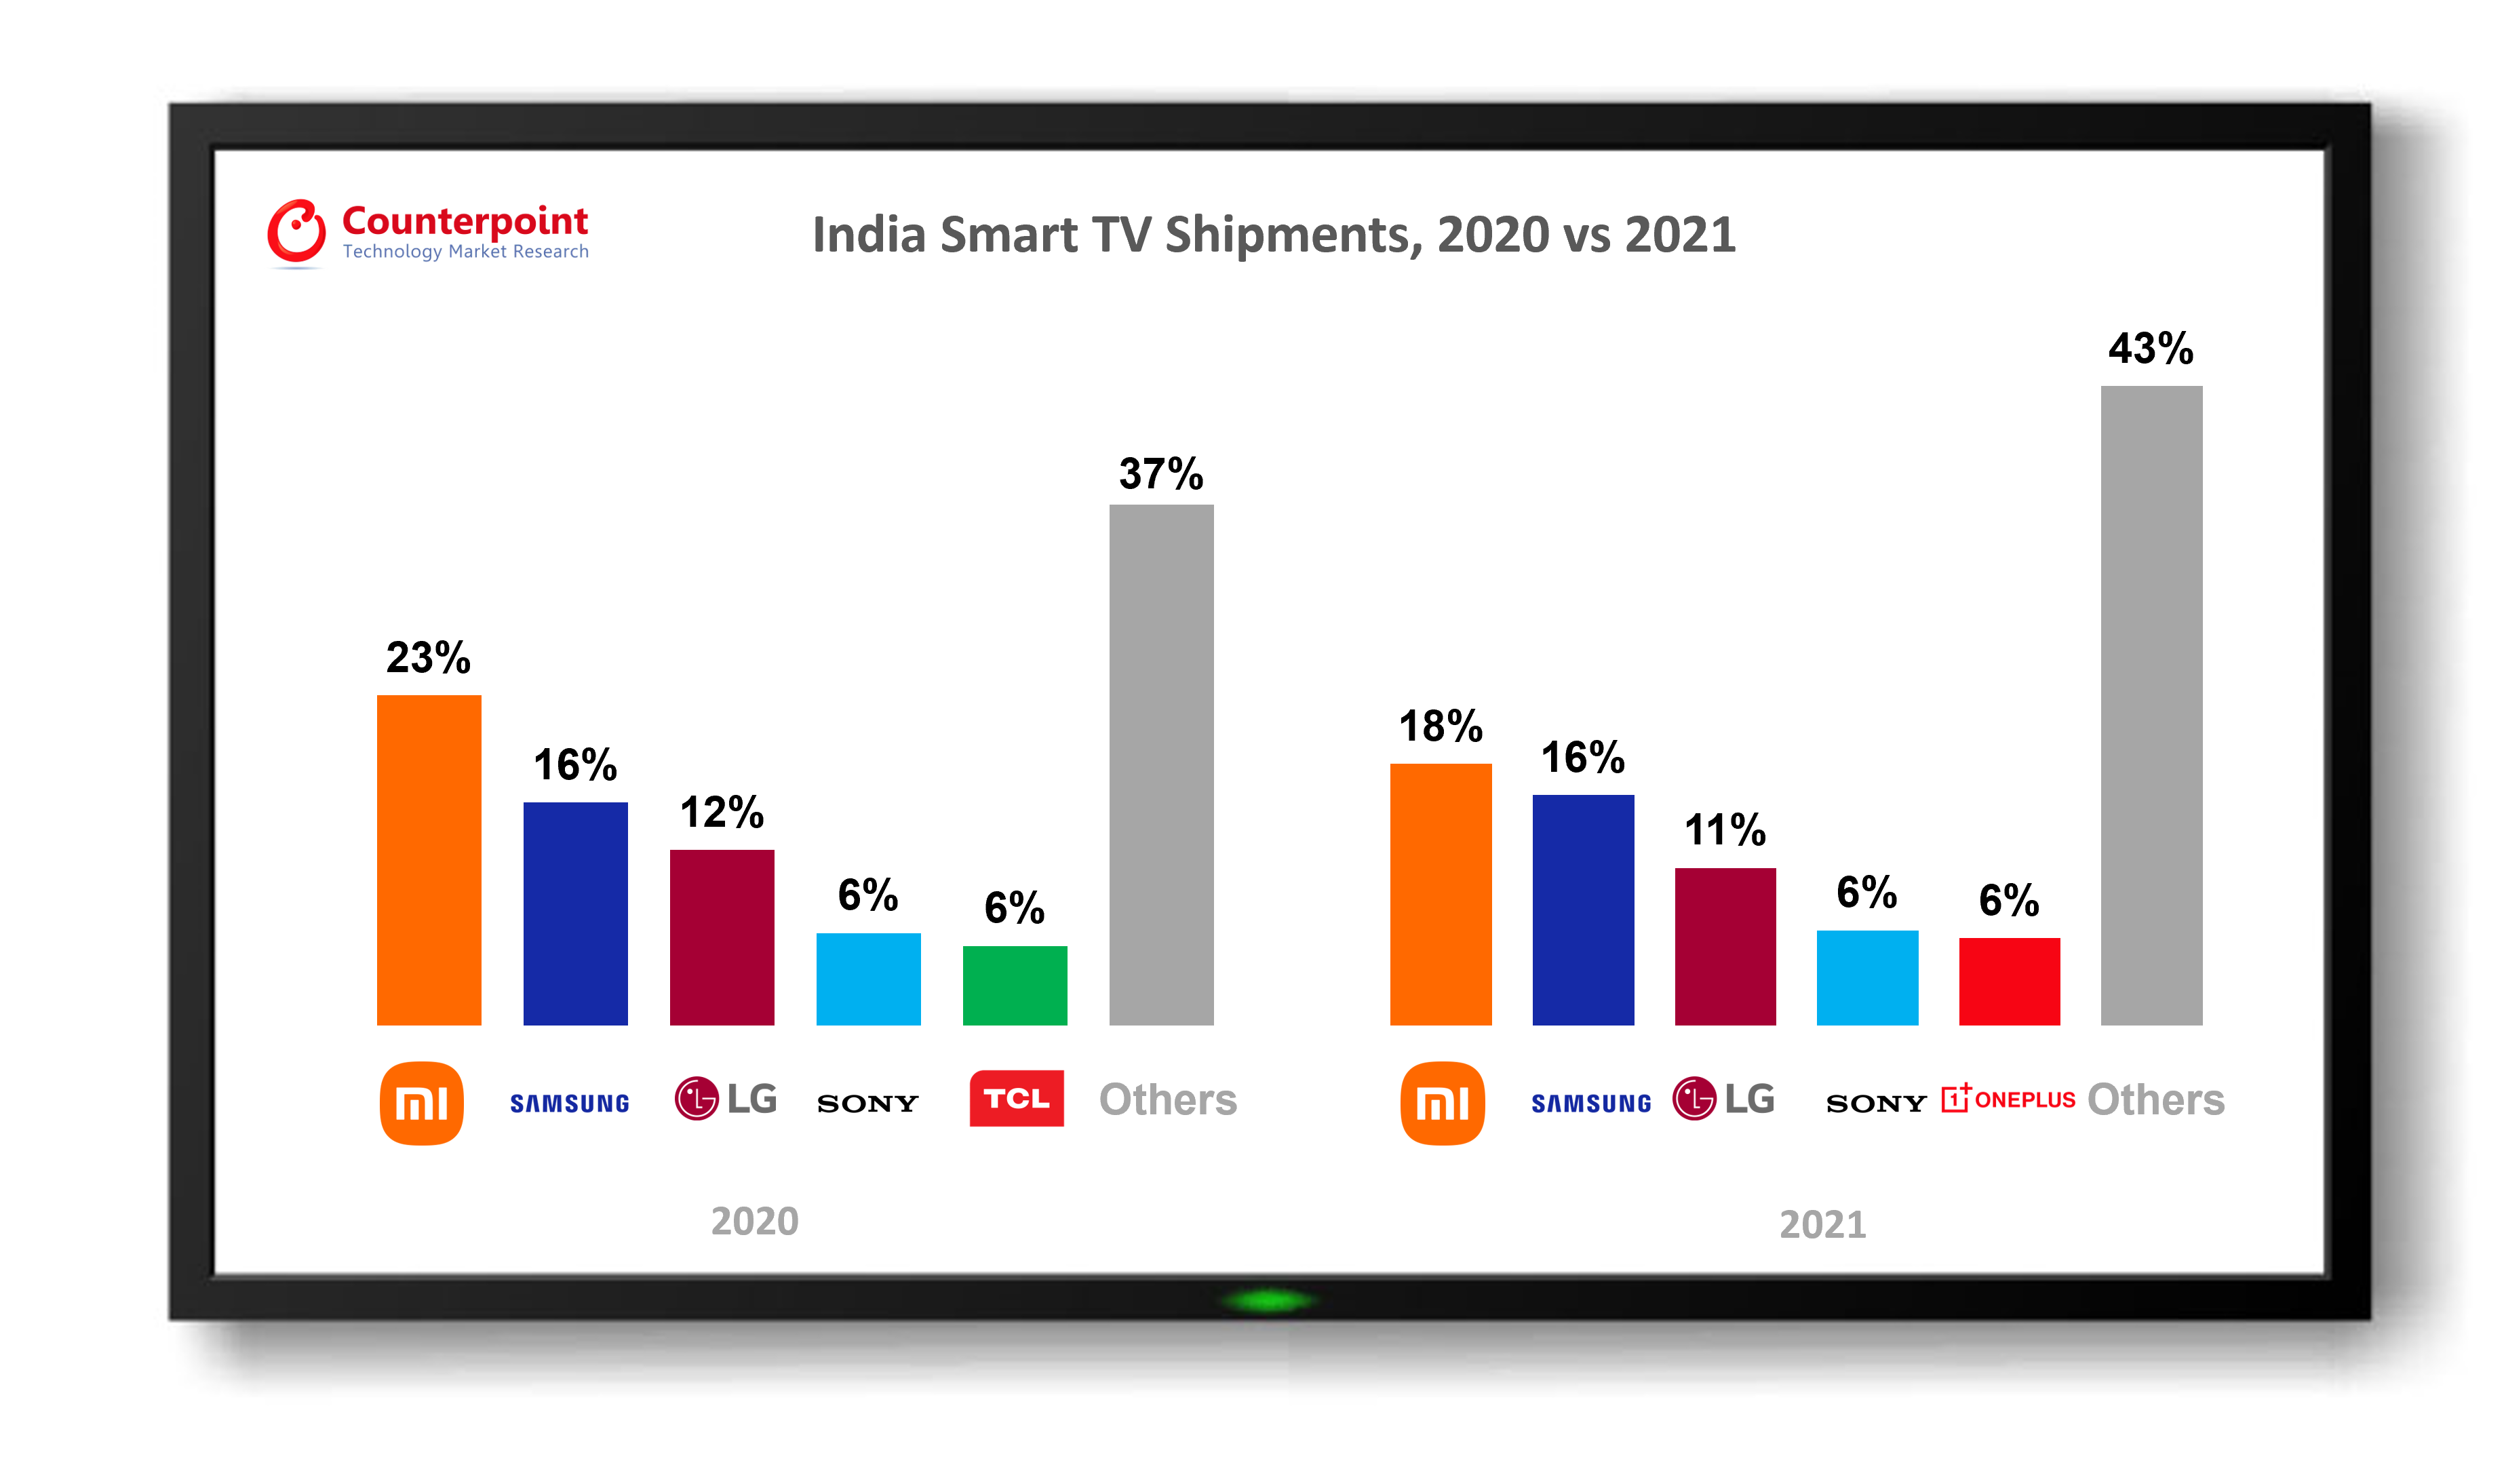 India Smart TV Market Share of Top 5 Brands, 2020 vs 2021